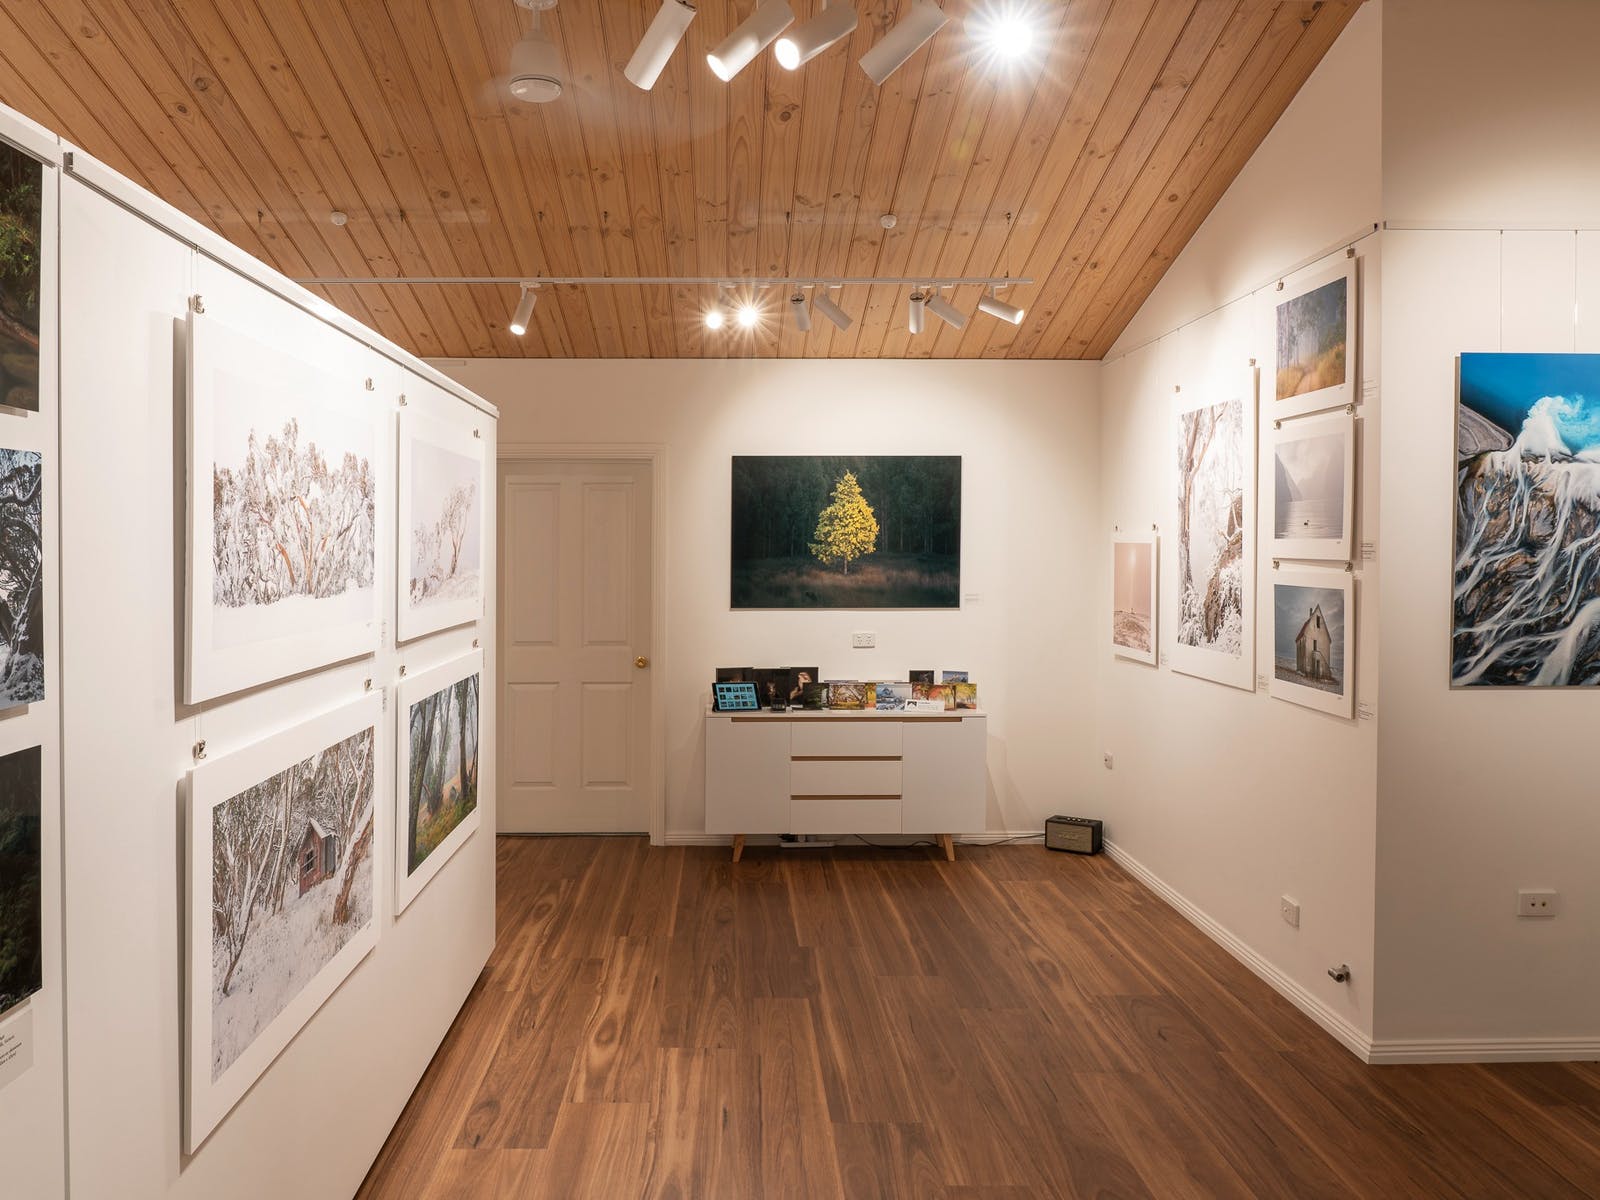 Alpine Light Gallery